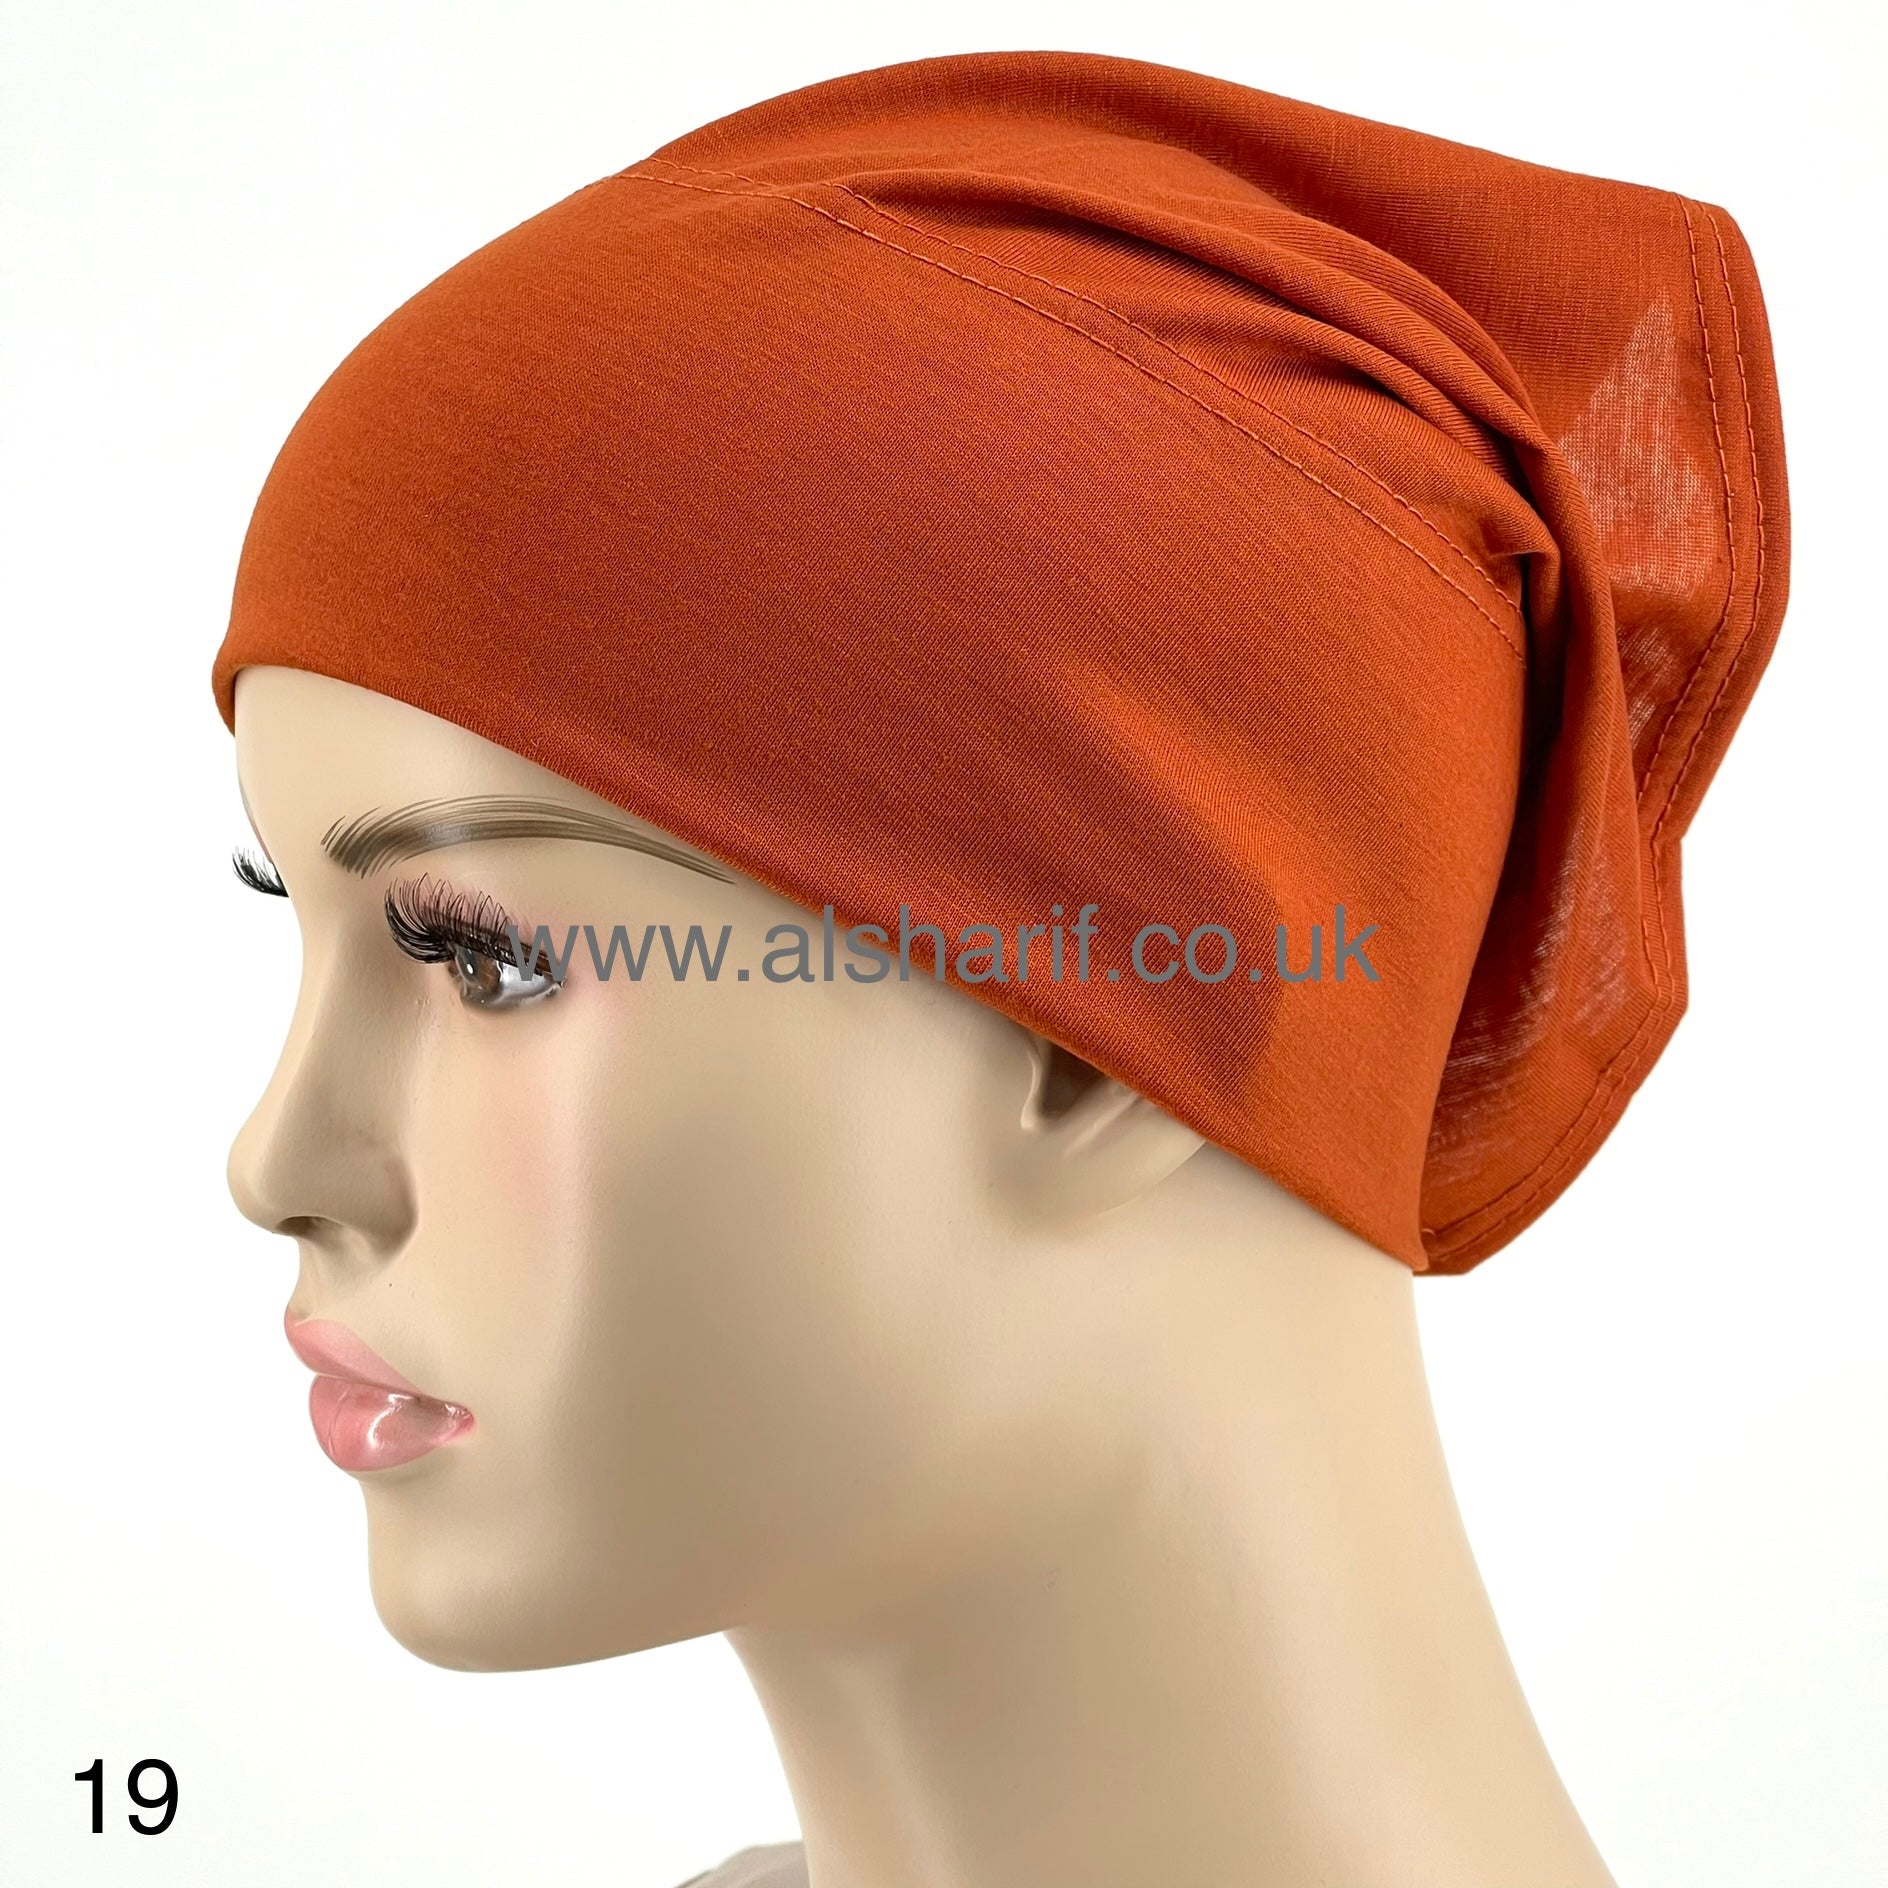 Under Hijab Tube Bonnet Cap #19